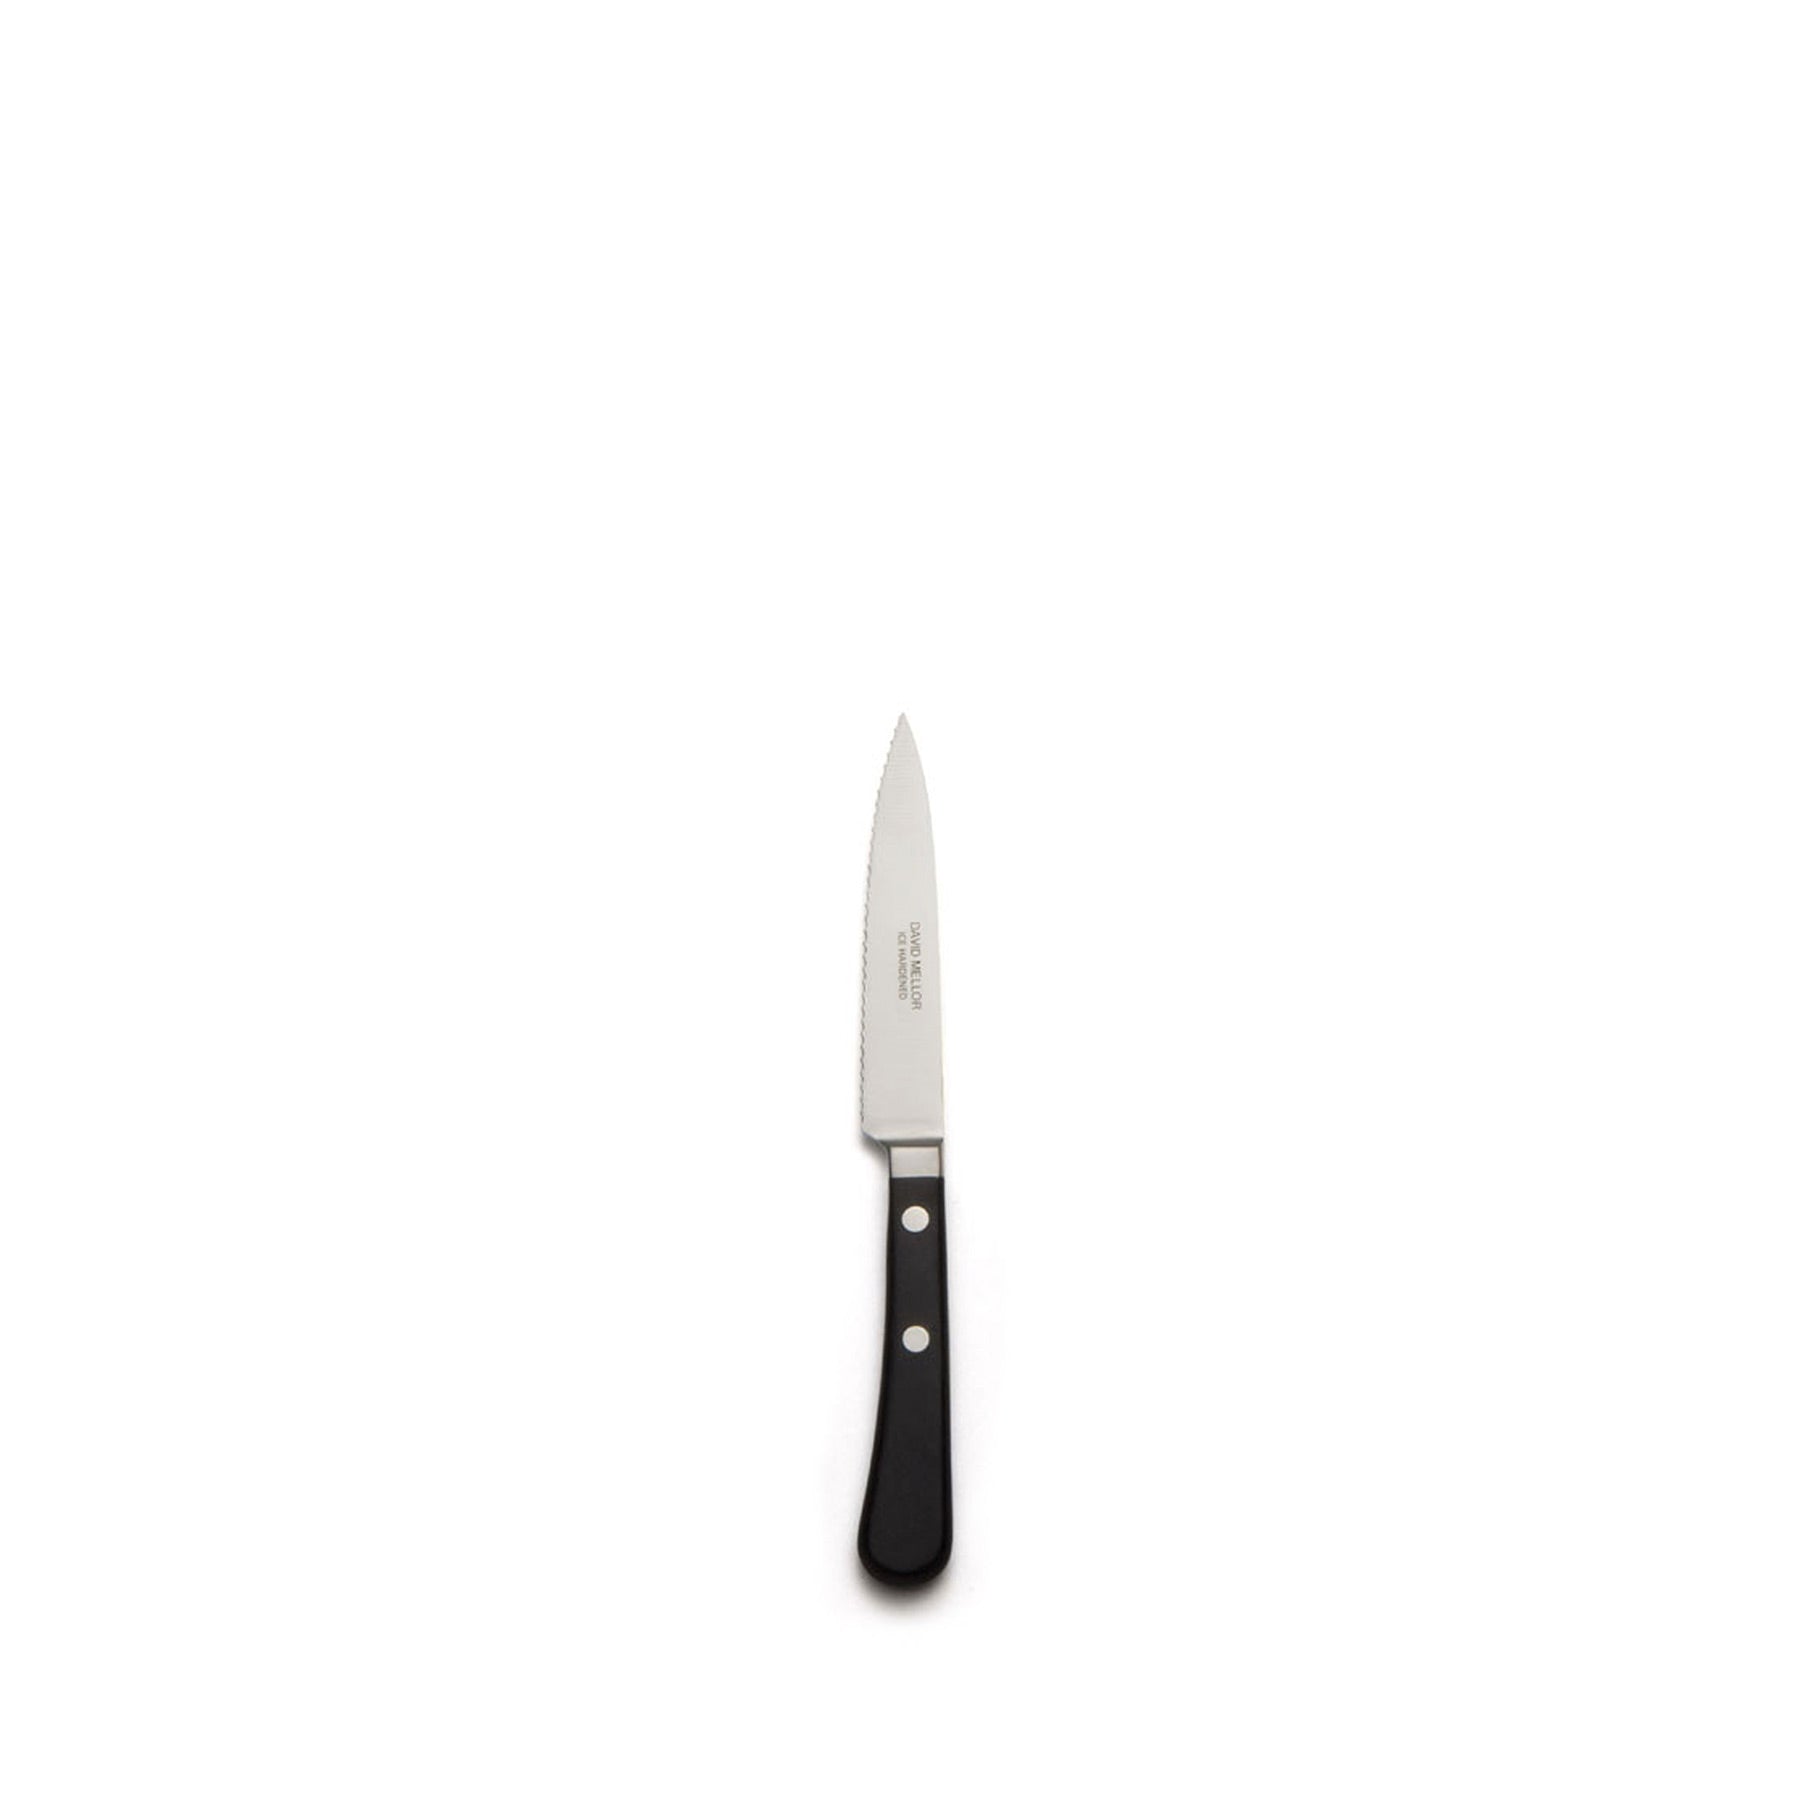 Sanelli 3 Paring Knife, Cutlery